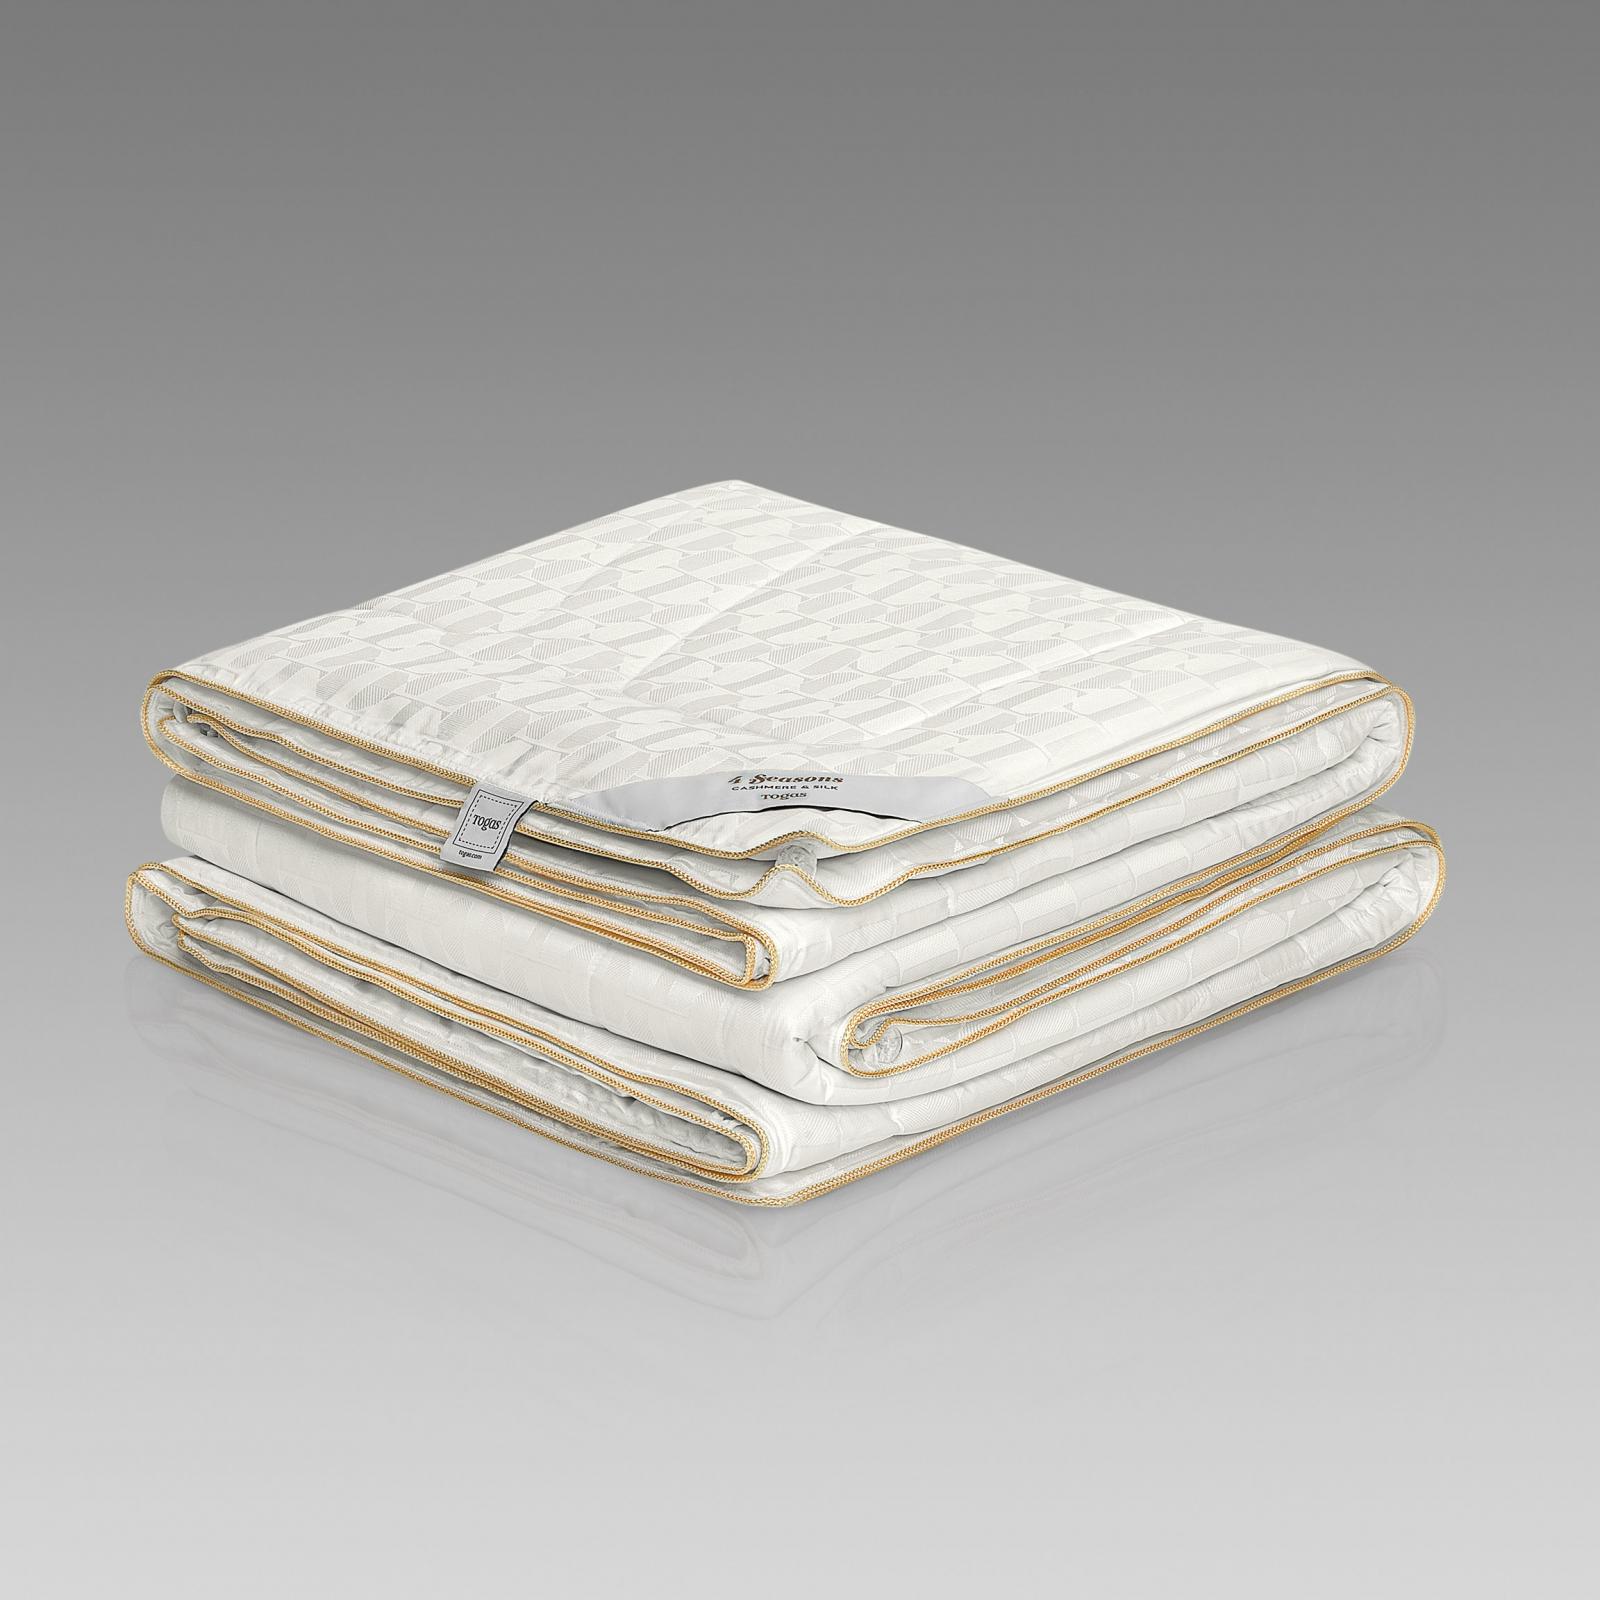 Одеяло Togas 4 сезона белое 140х200 см (20.04.40.0000) одеяло togas орбис 140х200 см